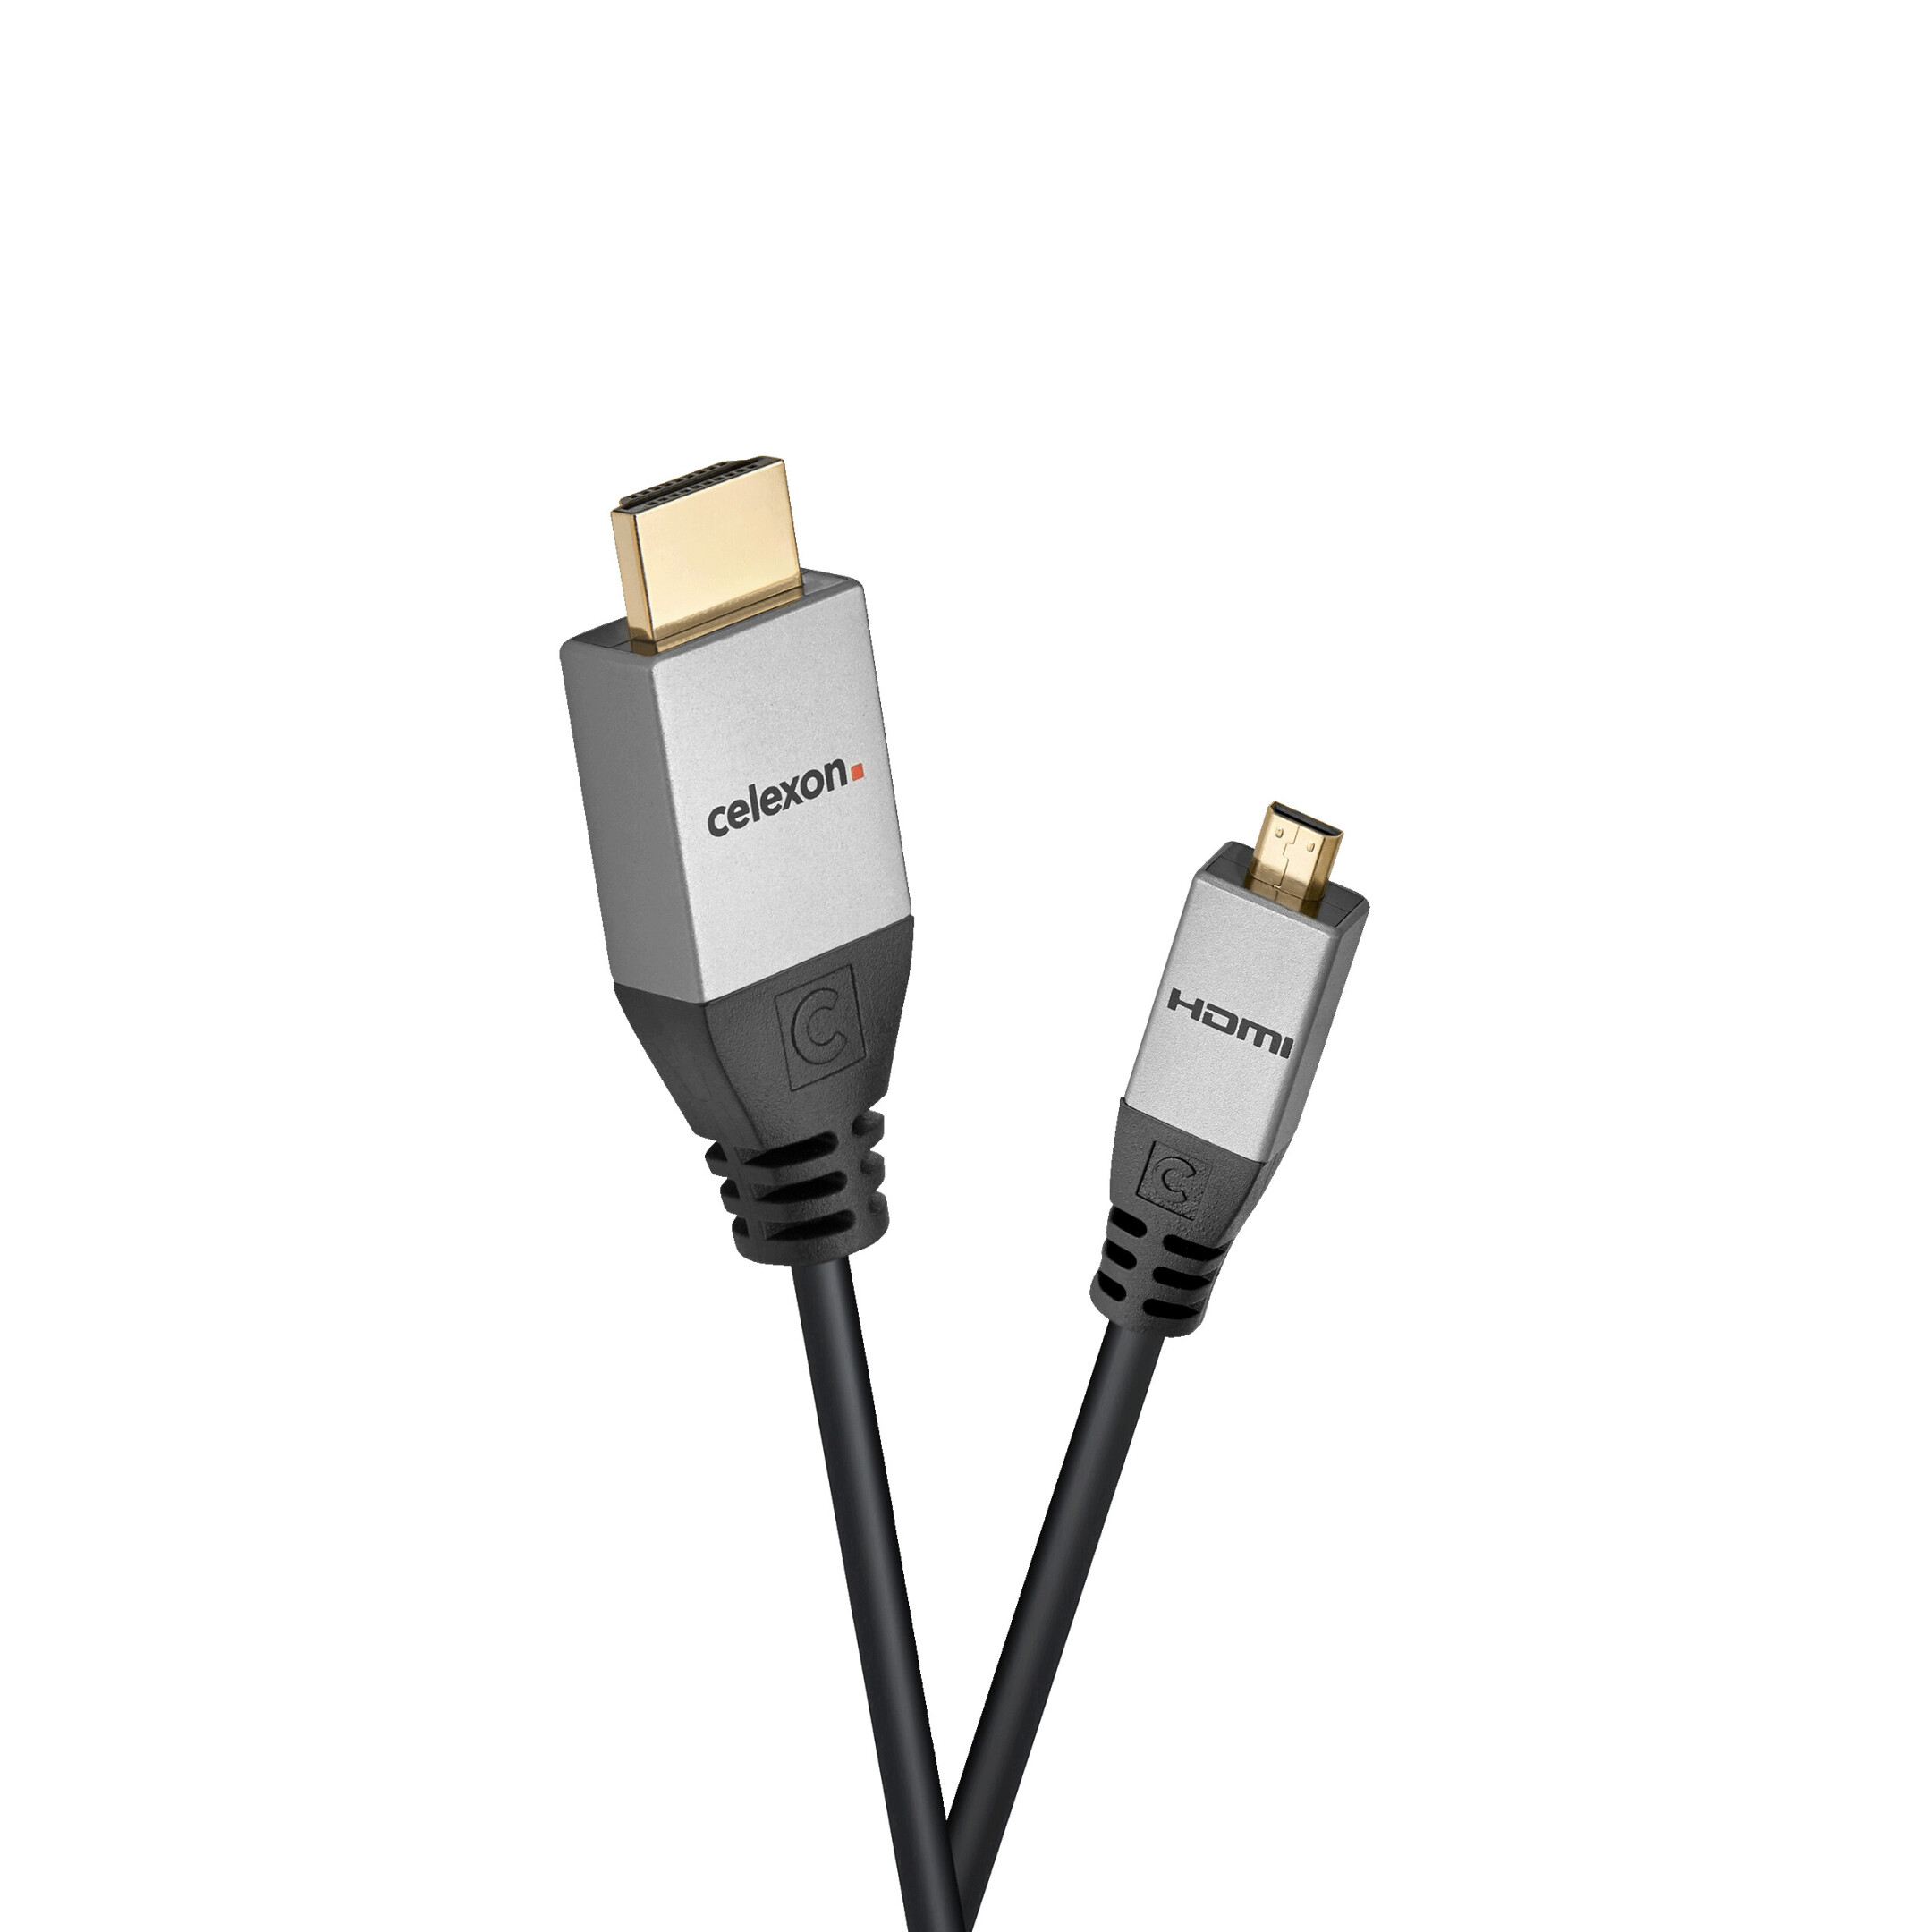 celexon-HDMI-naar-Micro-HDMI-kabel-met-Ethernet-2-0a-b-4K-2-0m-Professional